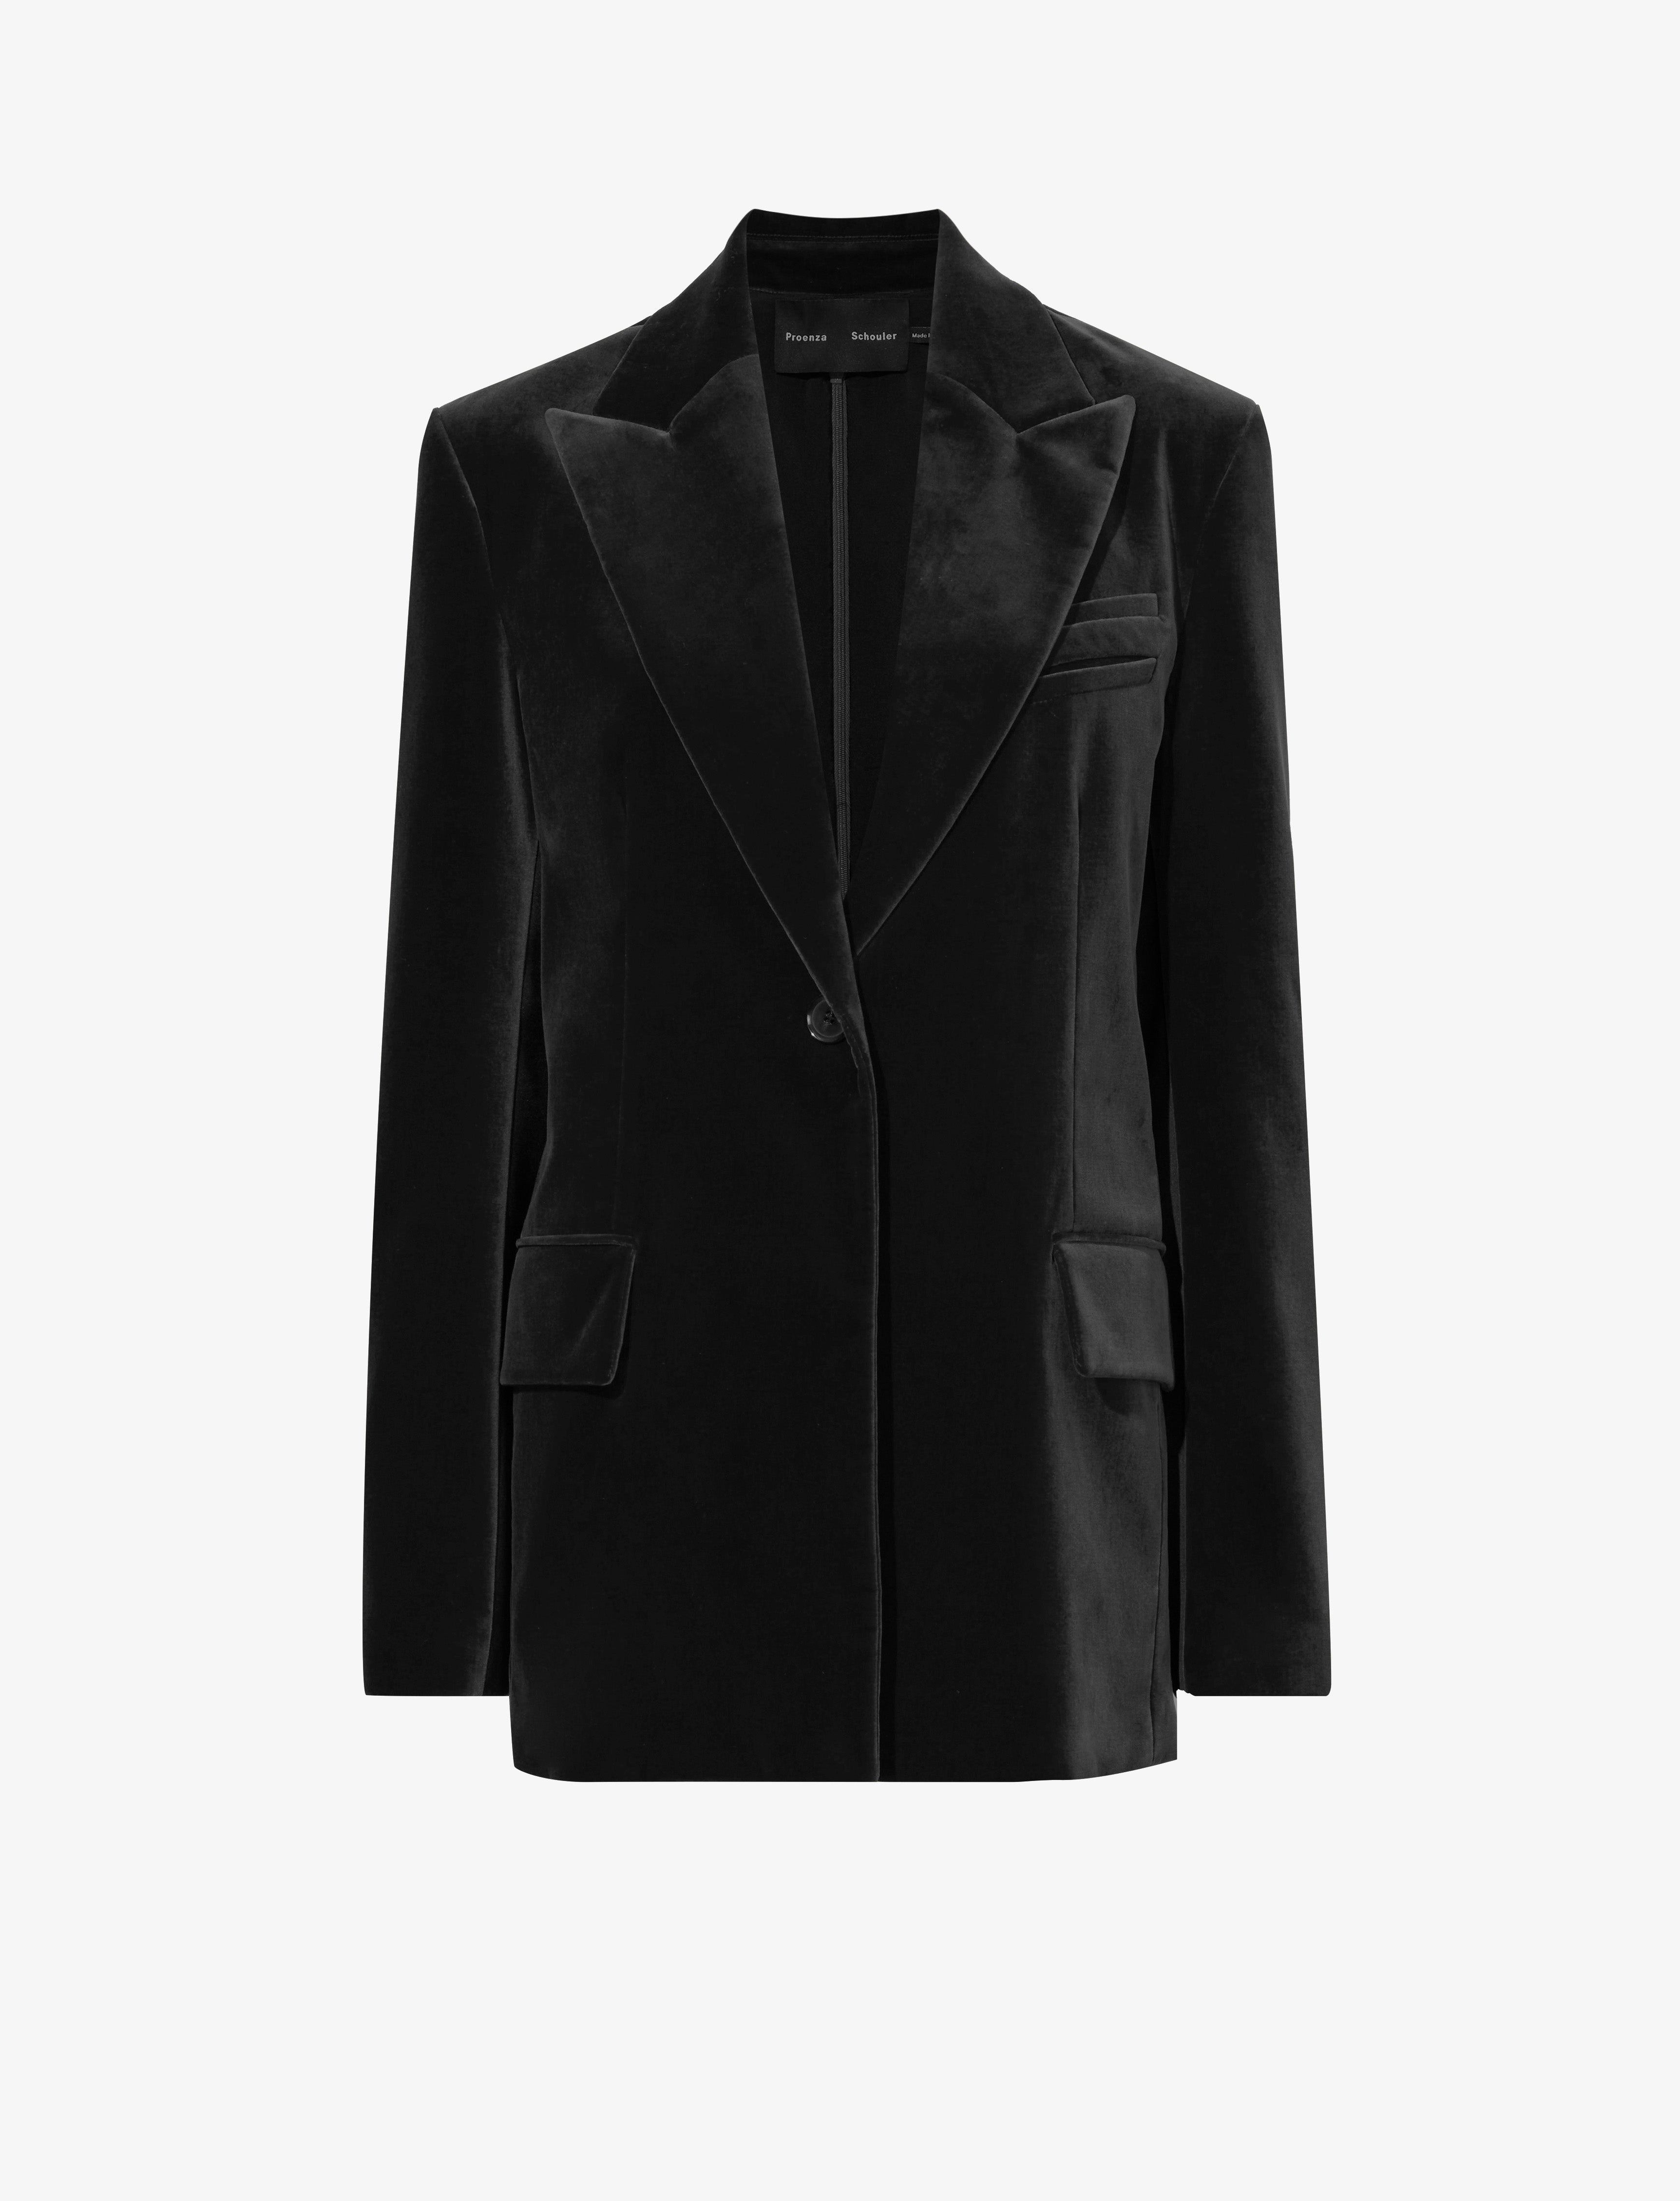 Nico Tuxedo Jacket in Velvet Suiting - 1